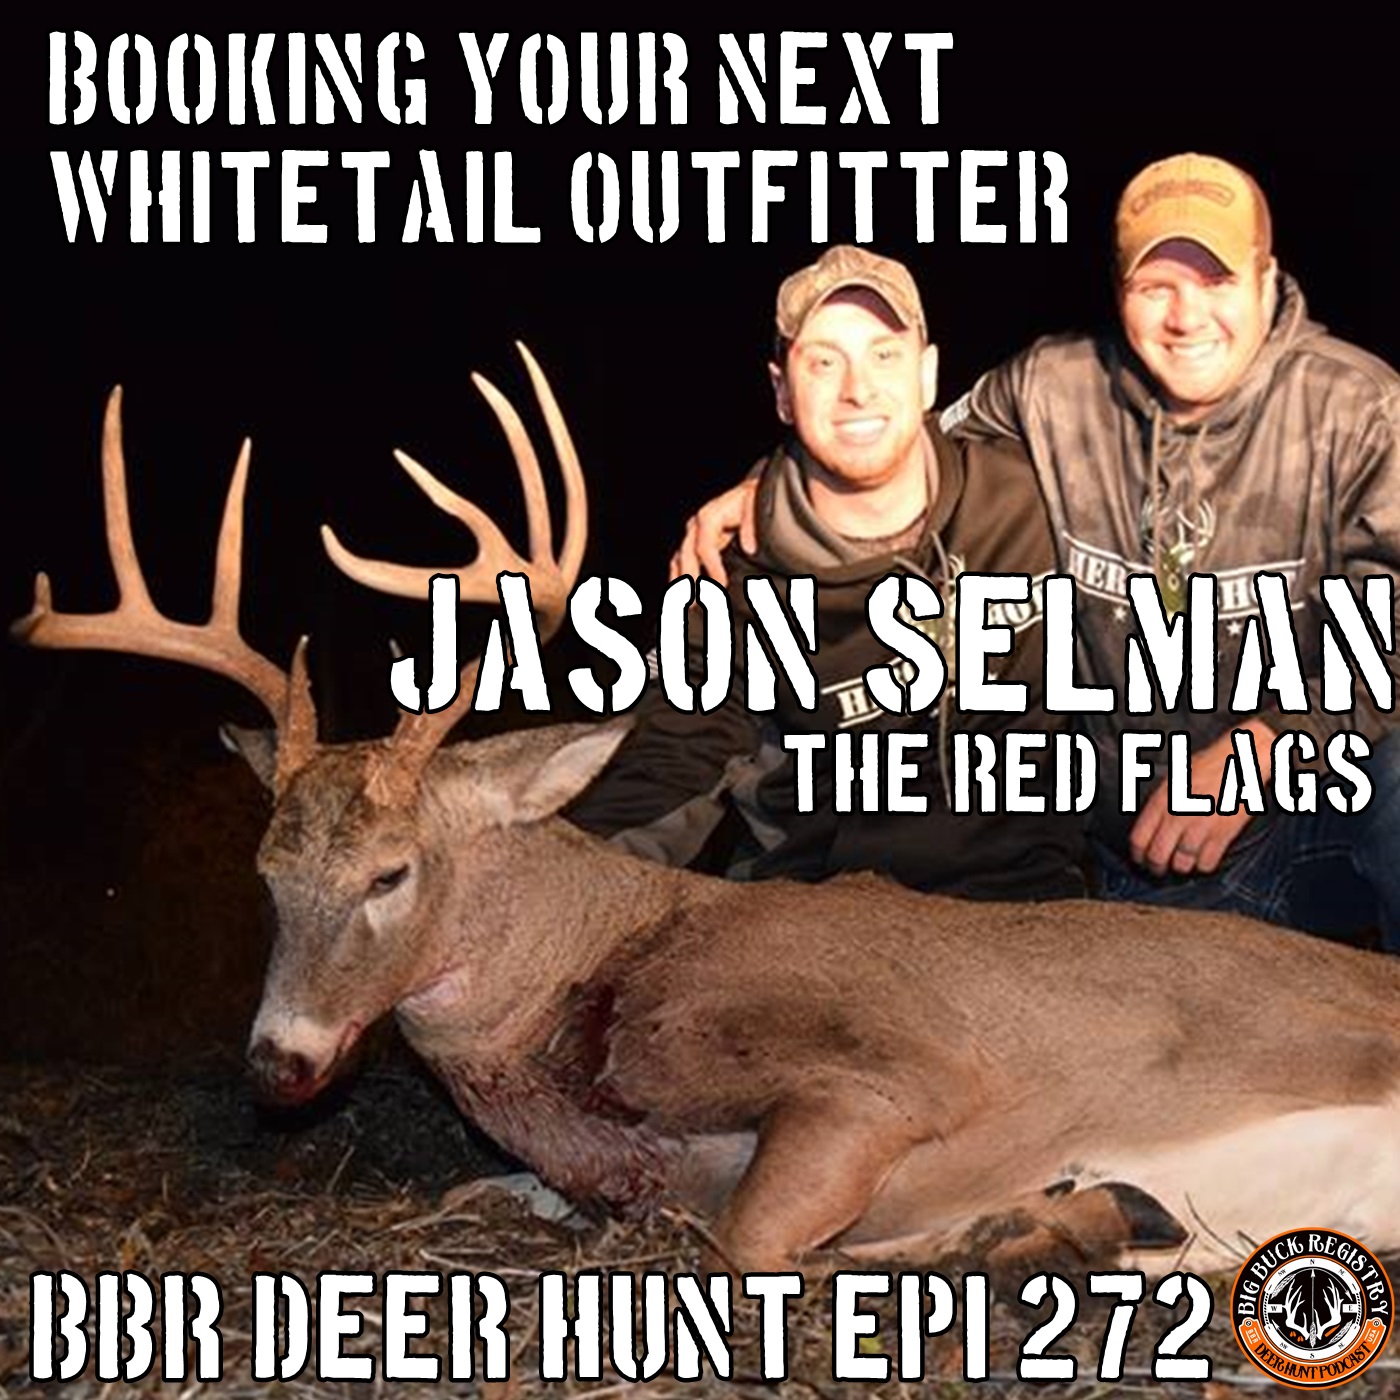 New york straight men dean deer hunter